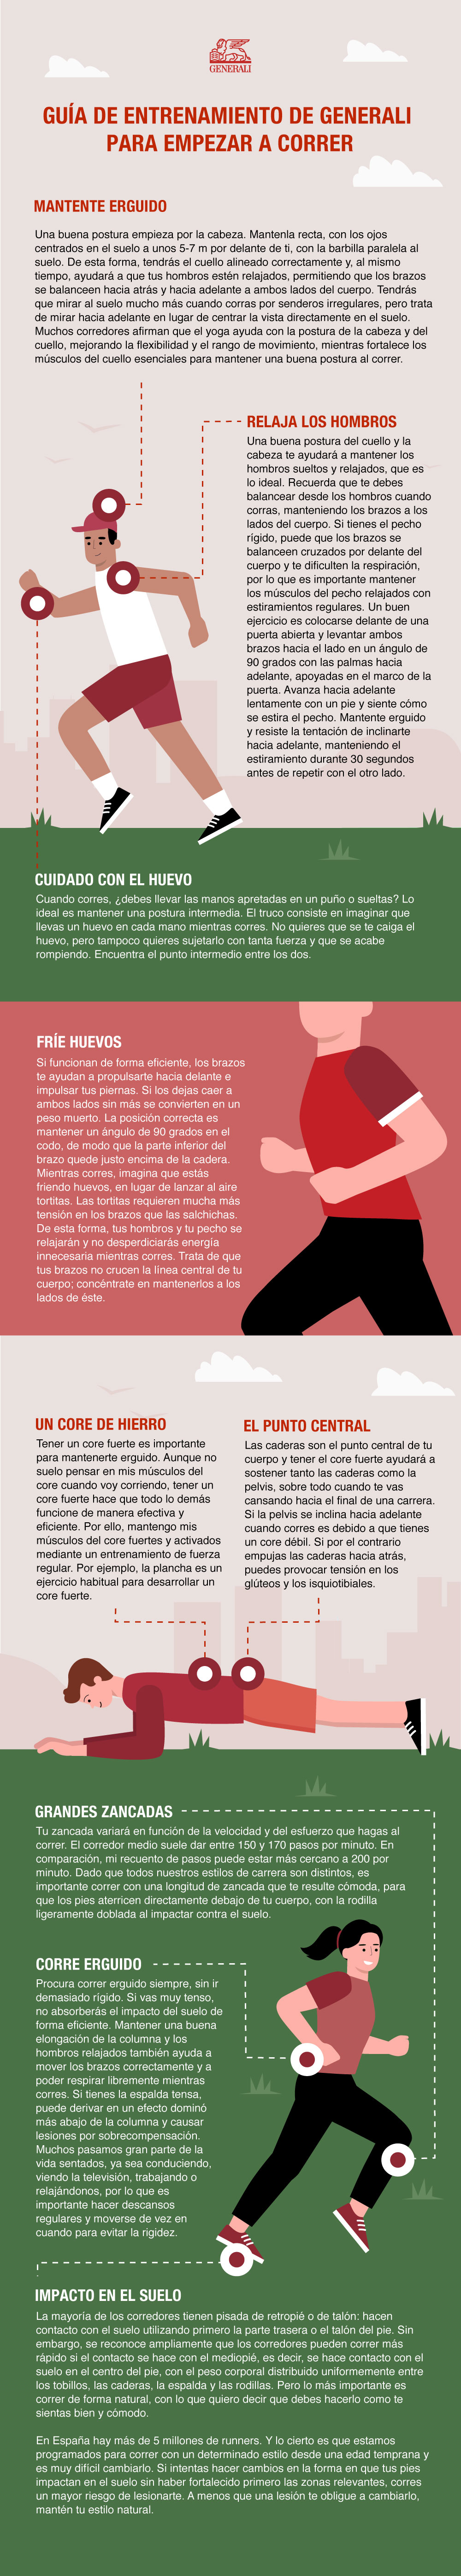 The-Coach-Generali-Guide-to-How-to-Run_Spain_.jpg